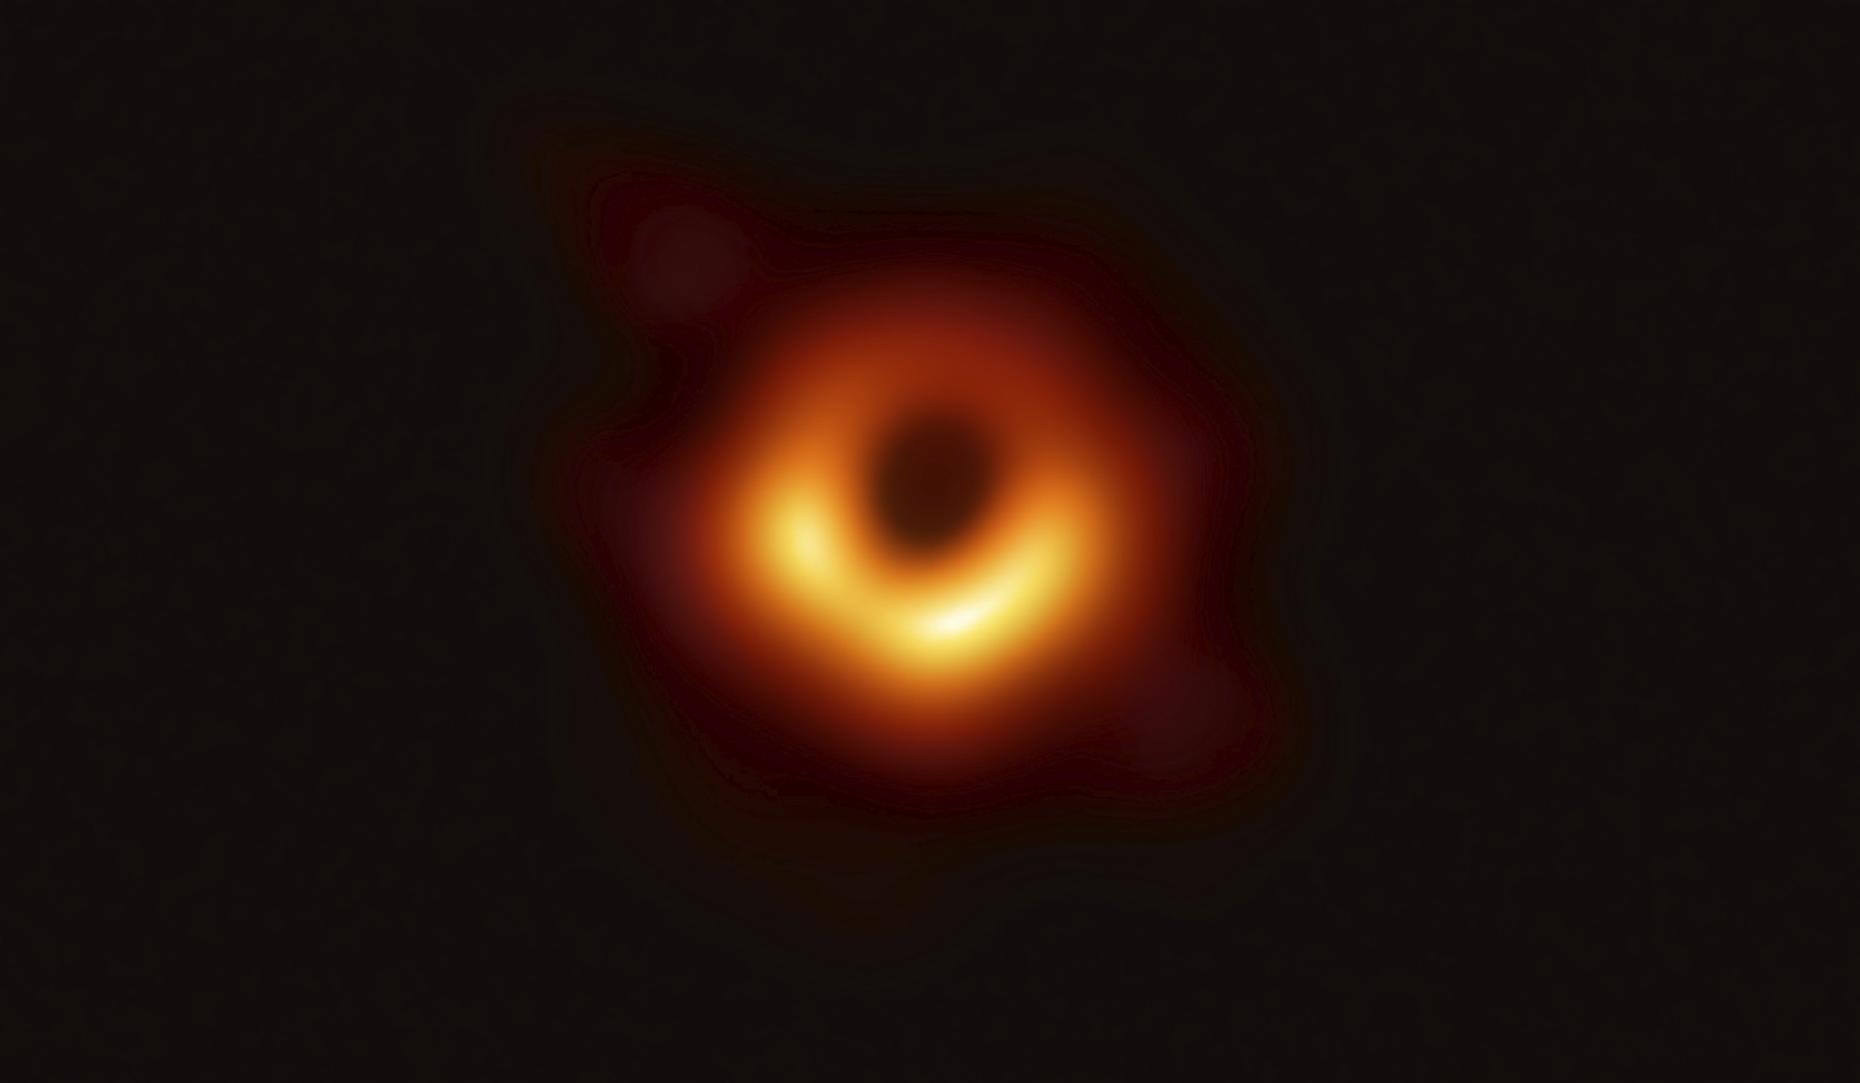 event horizon telescope results